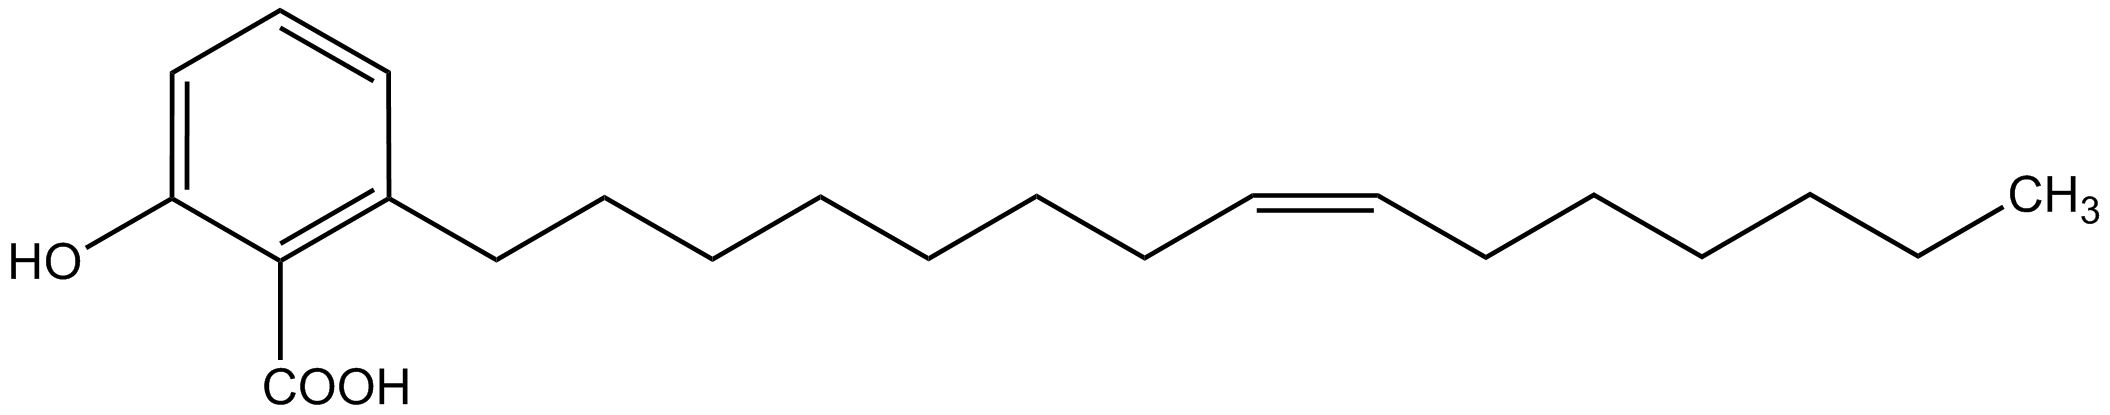 Ginkgolsäure C15:1 phyproof® Referenzsubstanz | PhytoLab